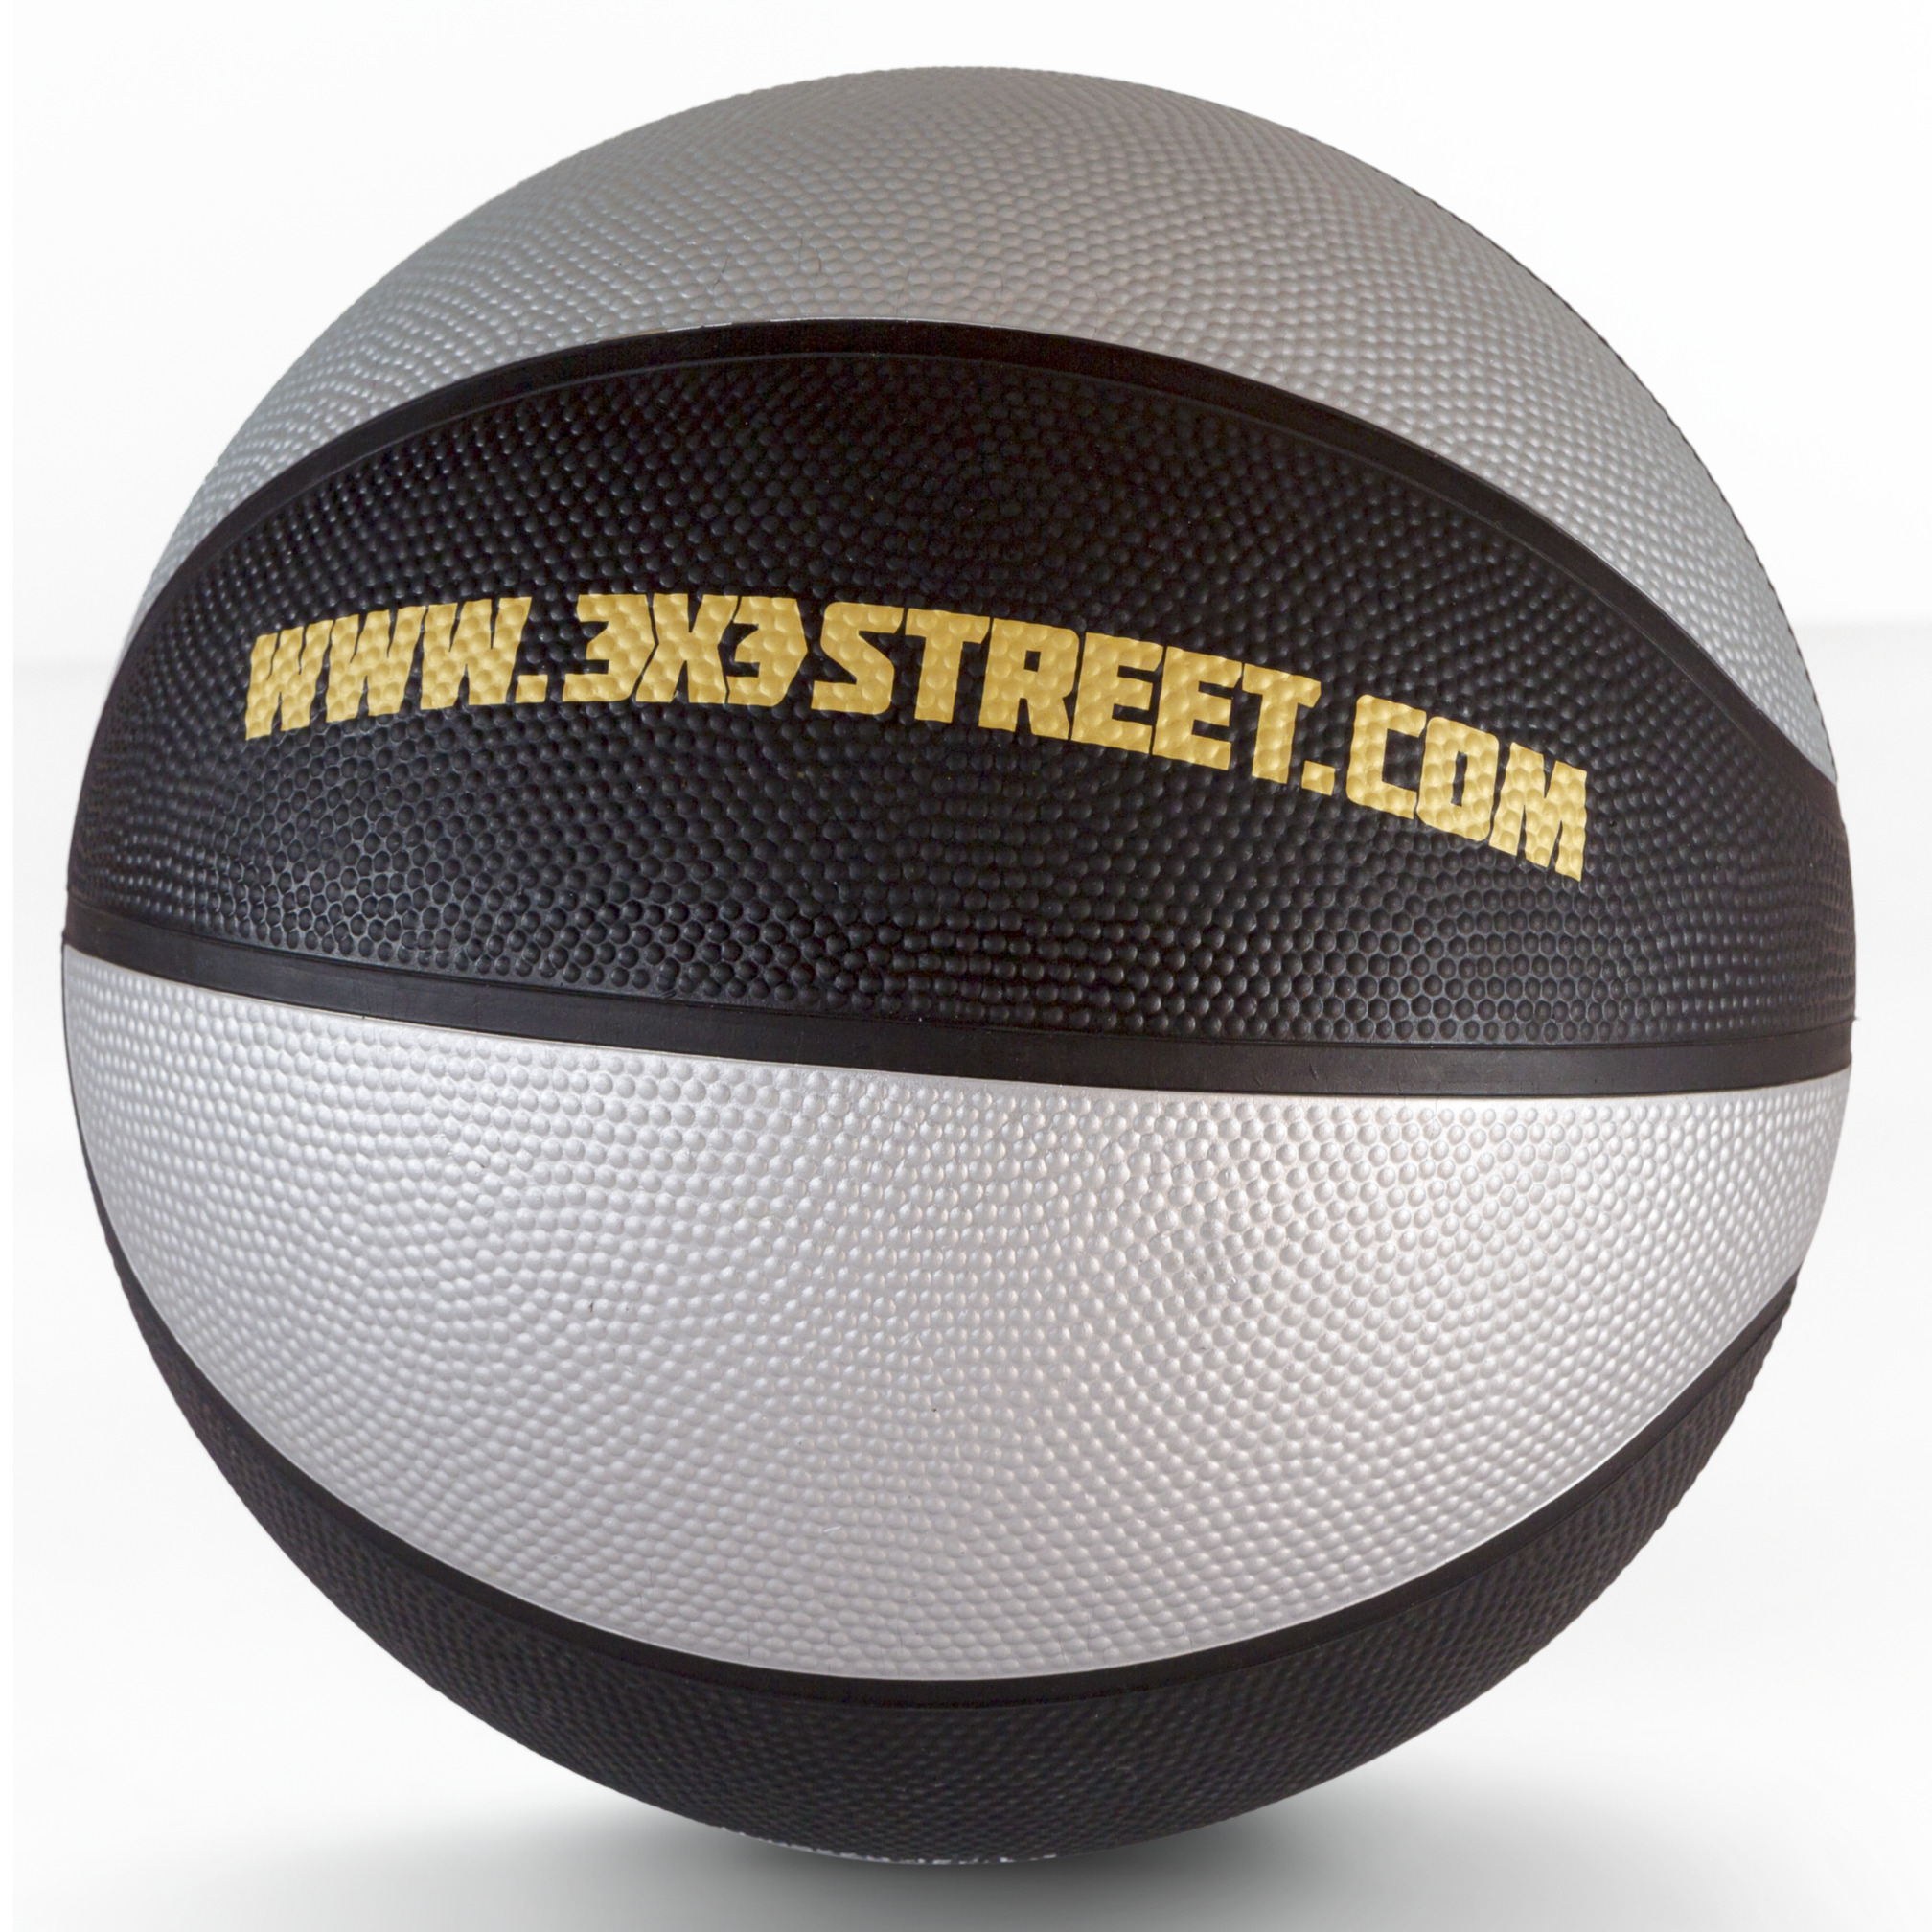 Ballon de basket Schelde Sports 3x3 Street